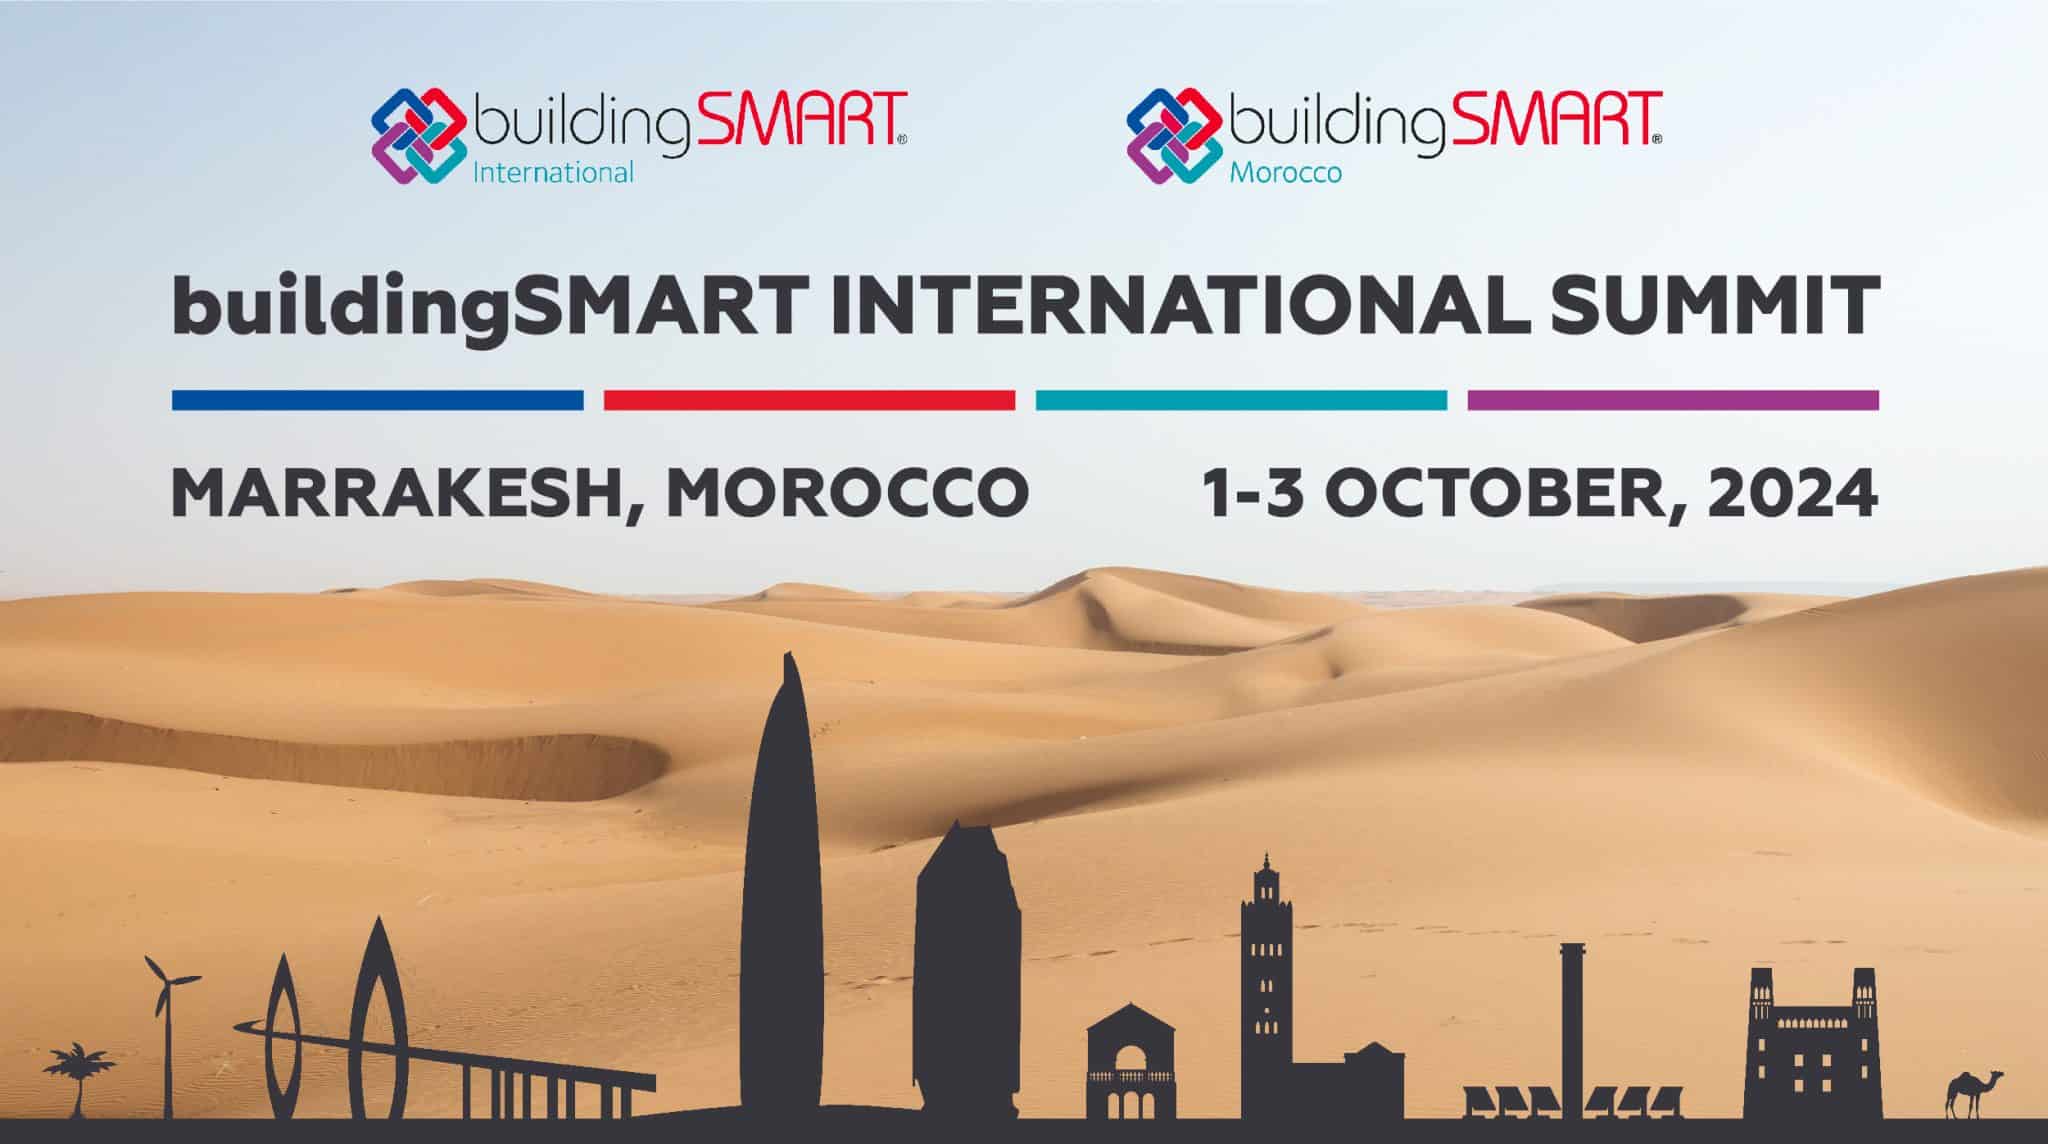 Sommet international buildingSMART – Marrakech 1-3 octobre 2024